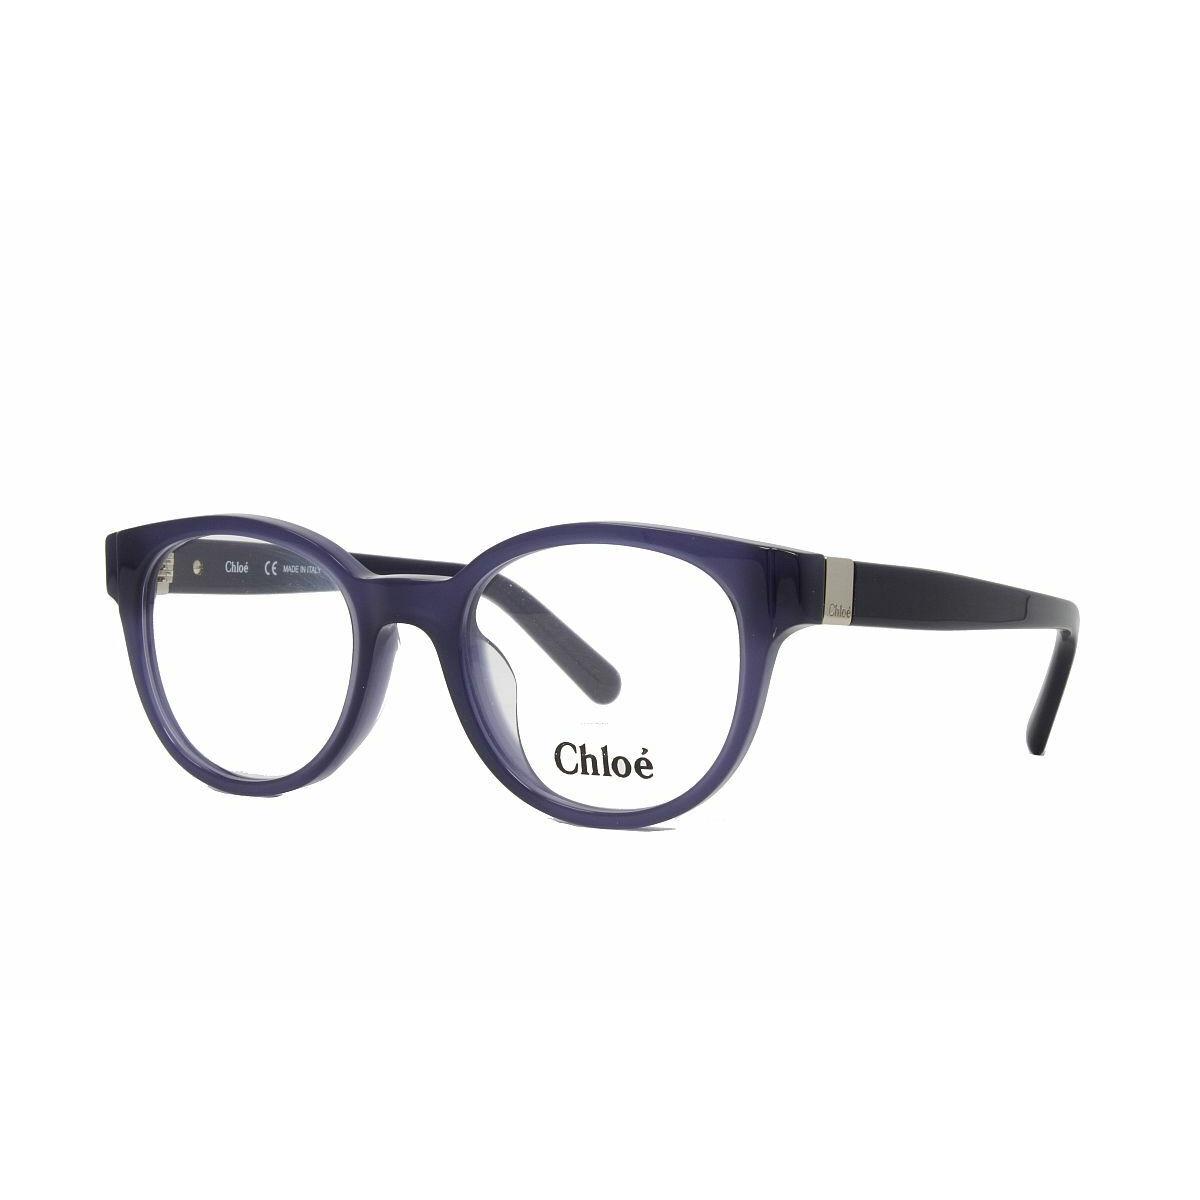 Chloé Chloe Women`s Eyeglasses CE2700A Color 424 Blue Size 49mm with Hard Case